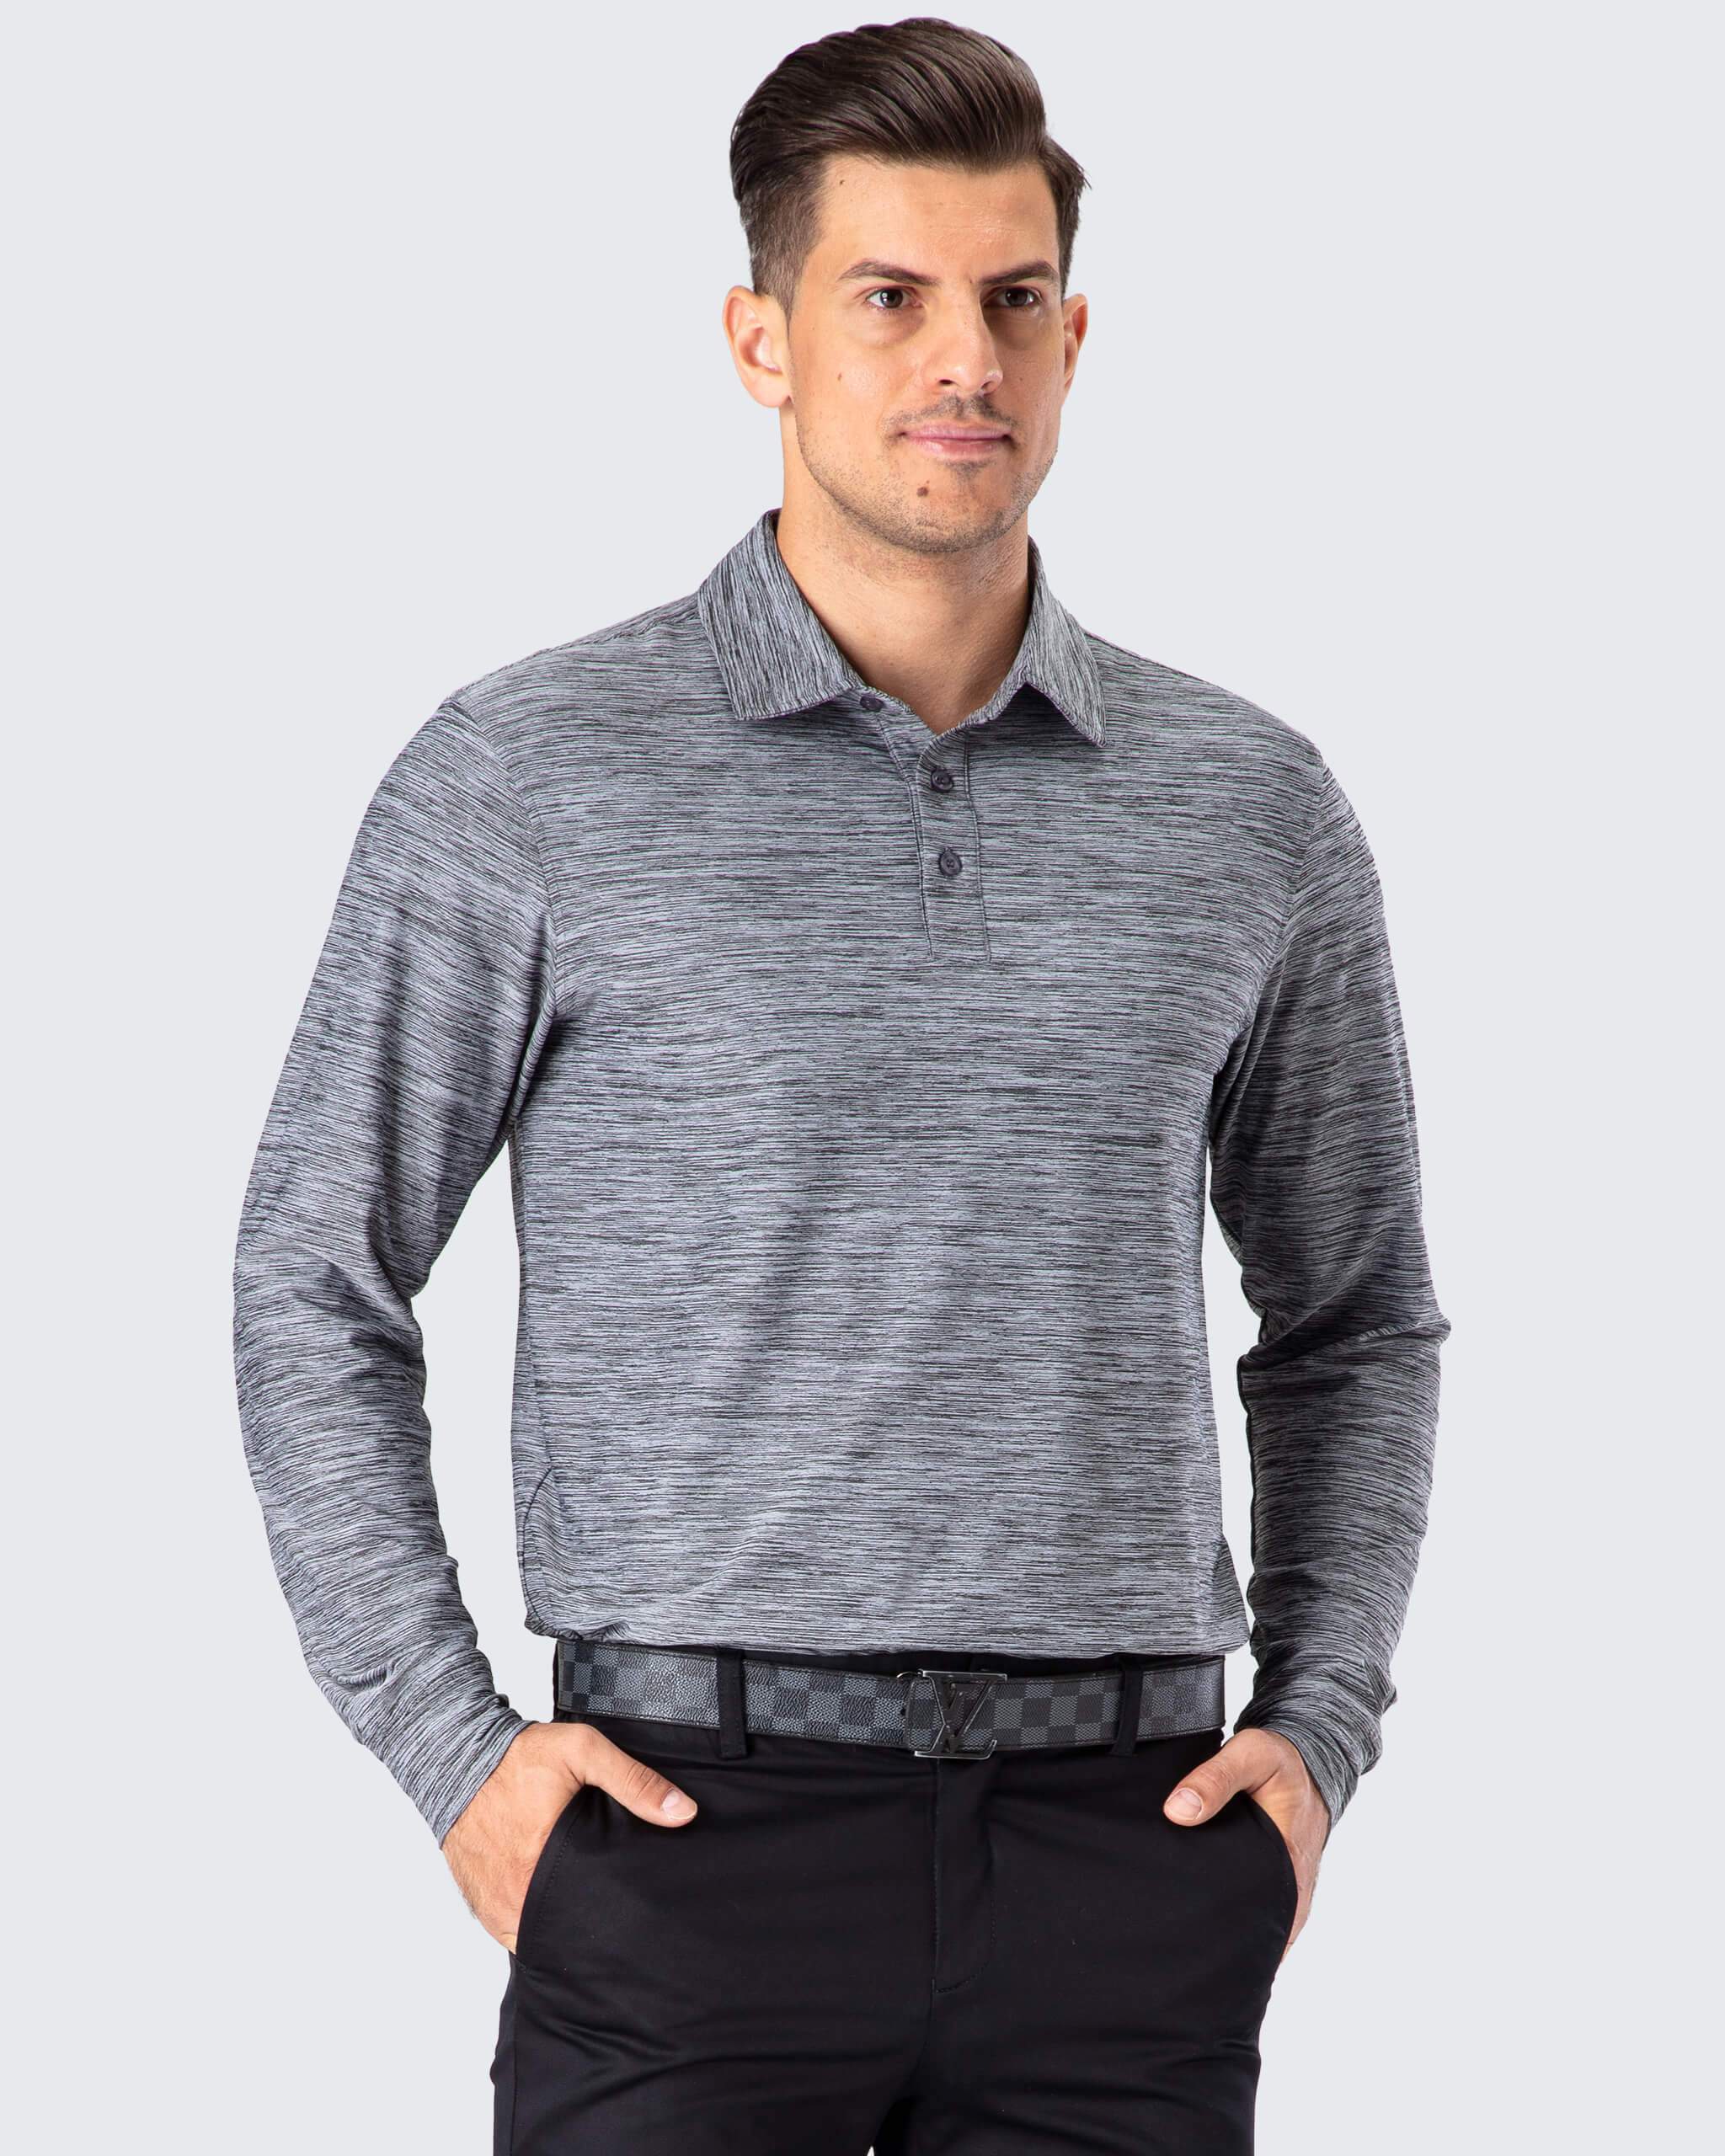 Naviskin Men's UPF 50+ Golf Polo Shirt Long Sleeve Quick Dry Athletic Workout, Dark Gray / Large